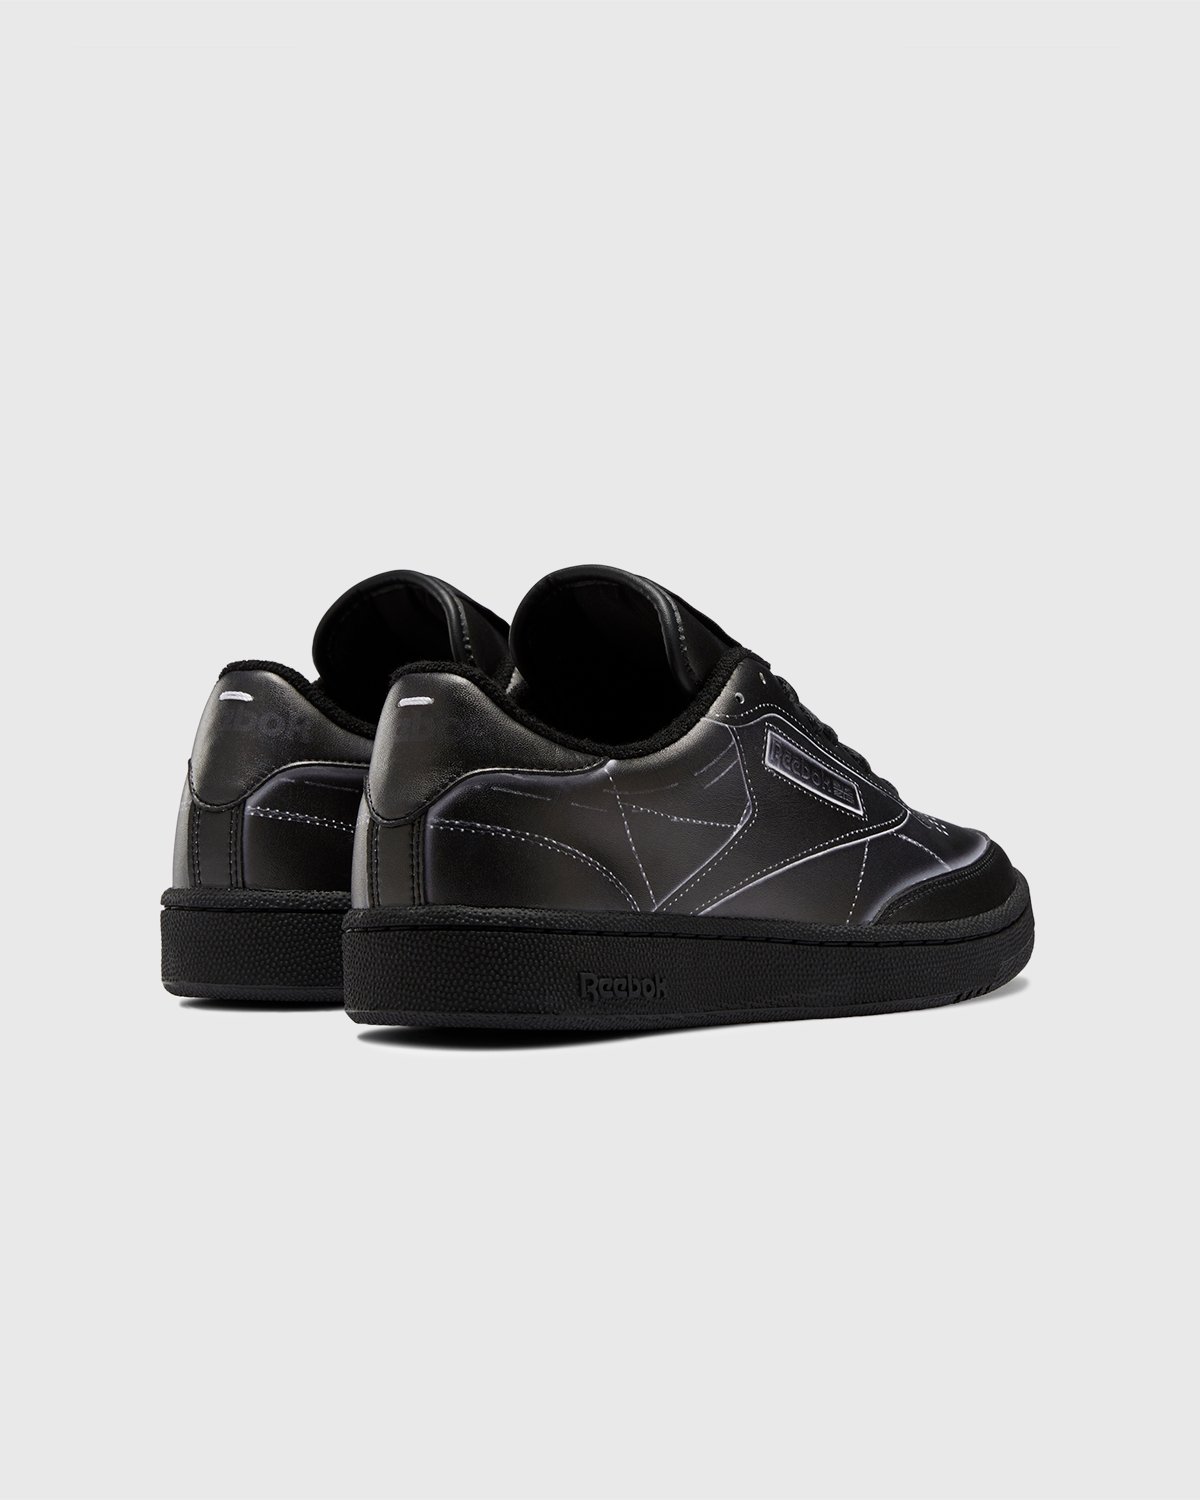 Maison Margiela x Reebok - Club C Trompe L’Oeil Black - Footwear - Black - Image 3